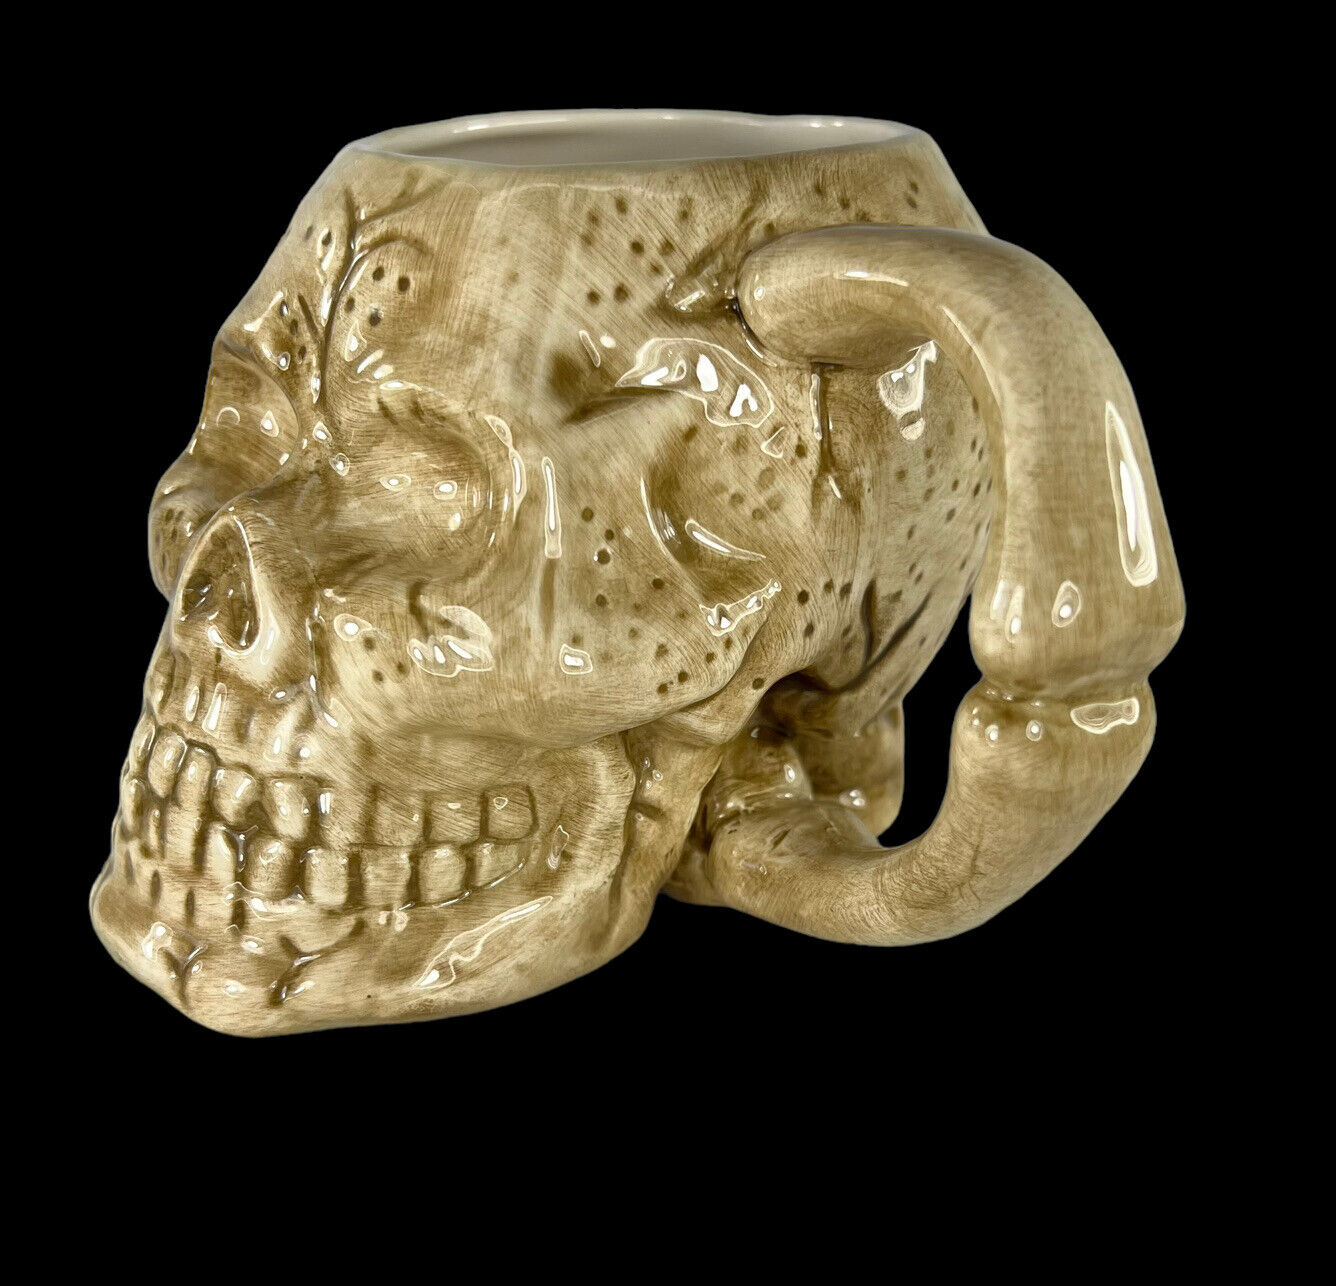 Skull And Bone Ceramic Vintage Mug Cup Dalton Handle Detailed For Display *READ*